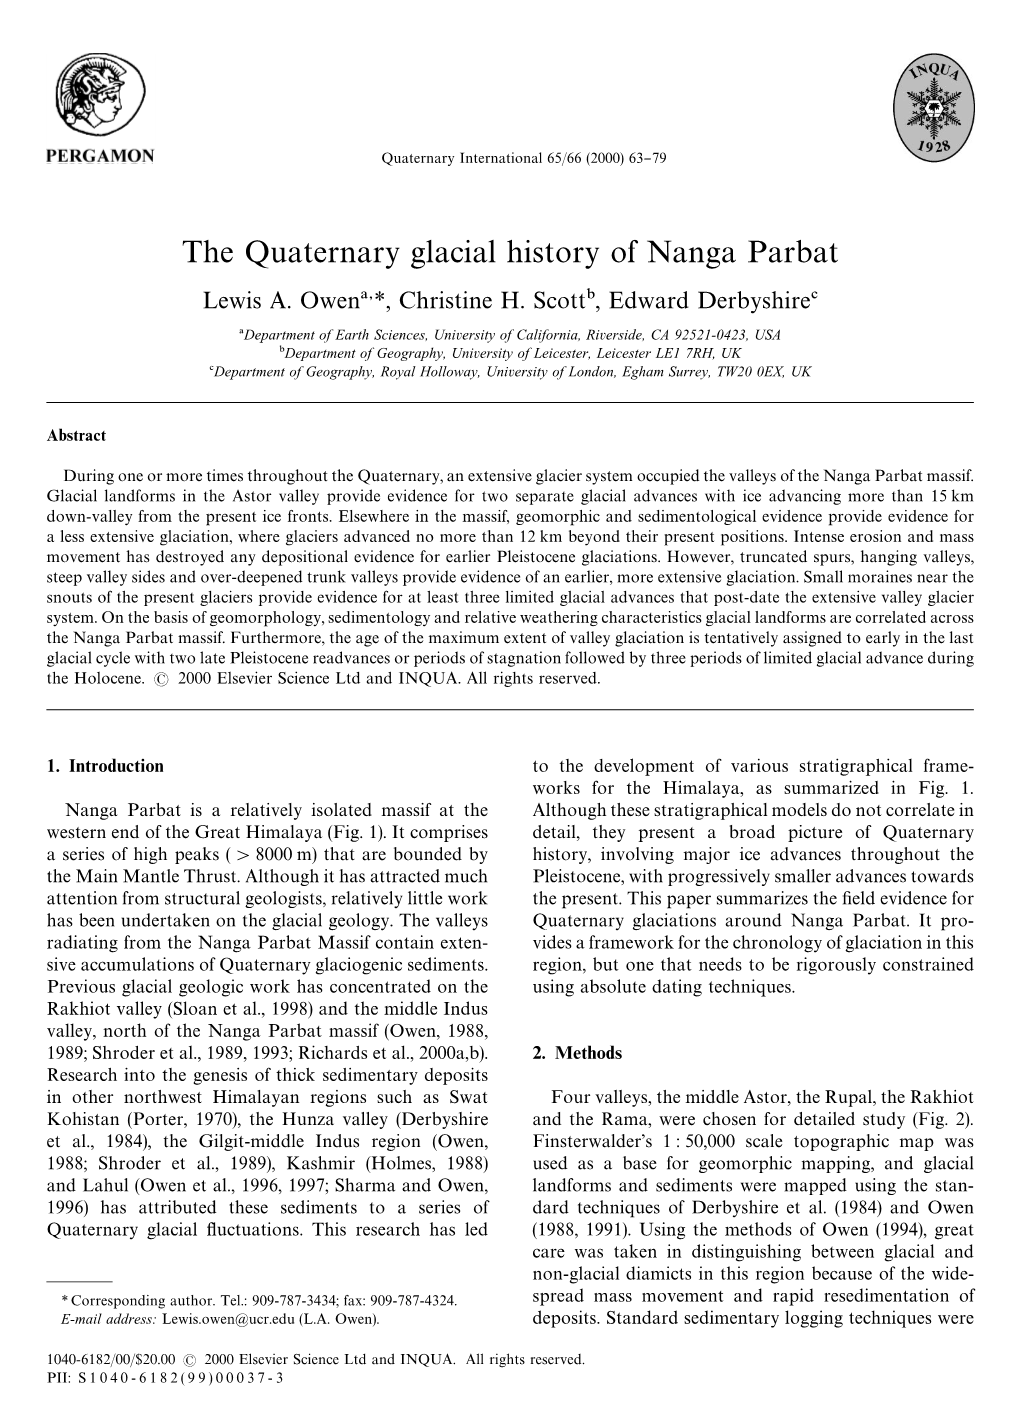 The Quaternary Glacial History of Nanga Parbat Lewis A